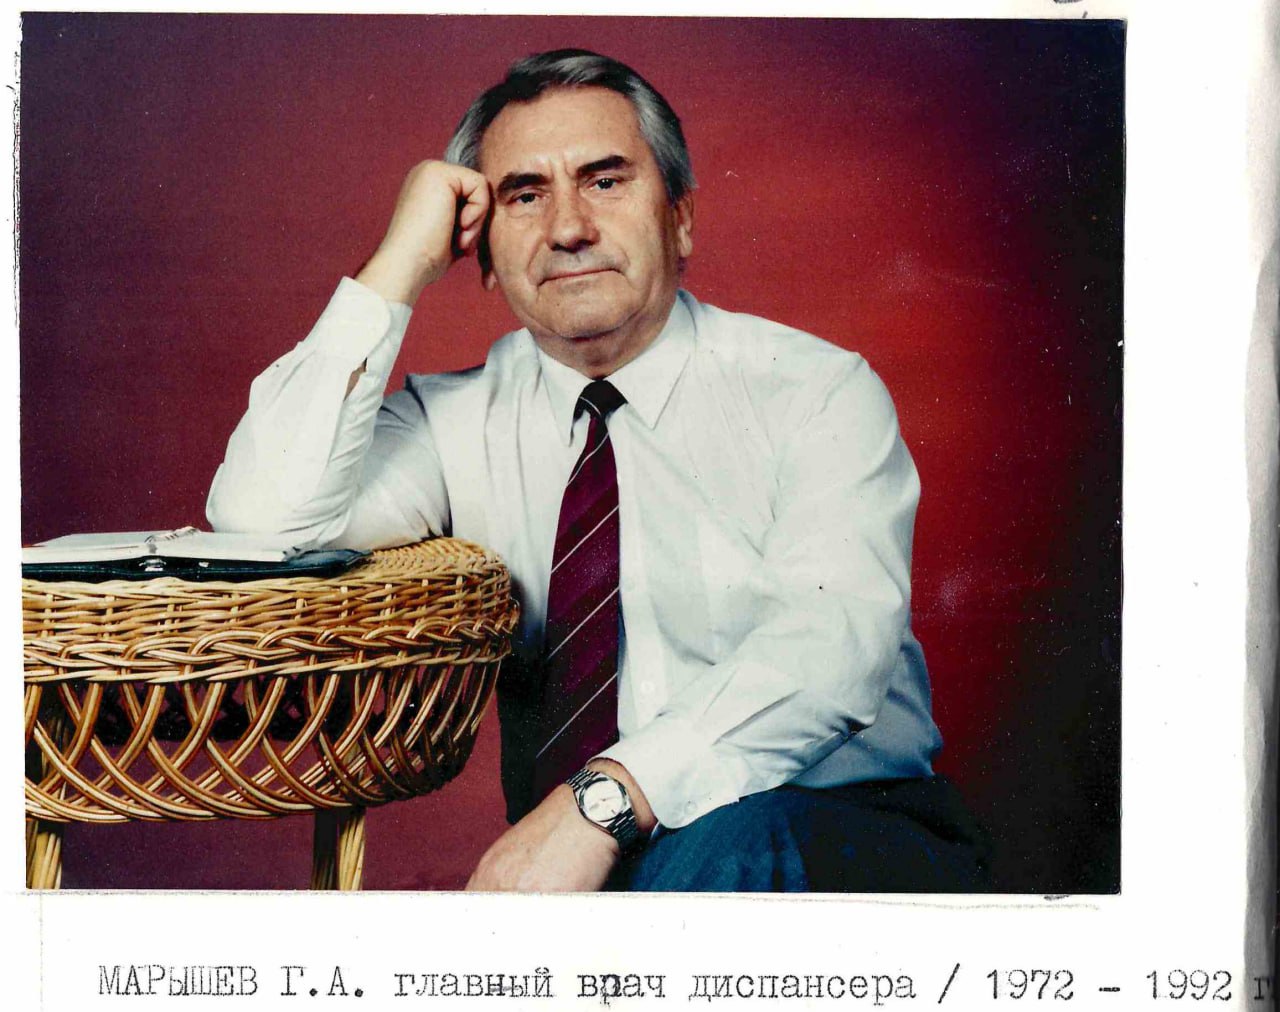 Марышев Г А 1972-1992 - главный врач тубдиспансер Калининград